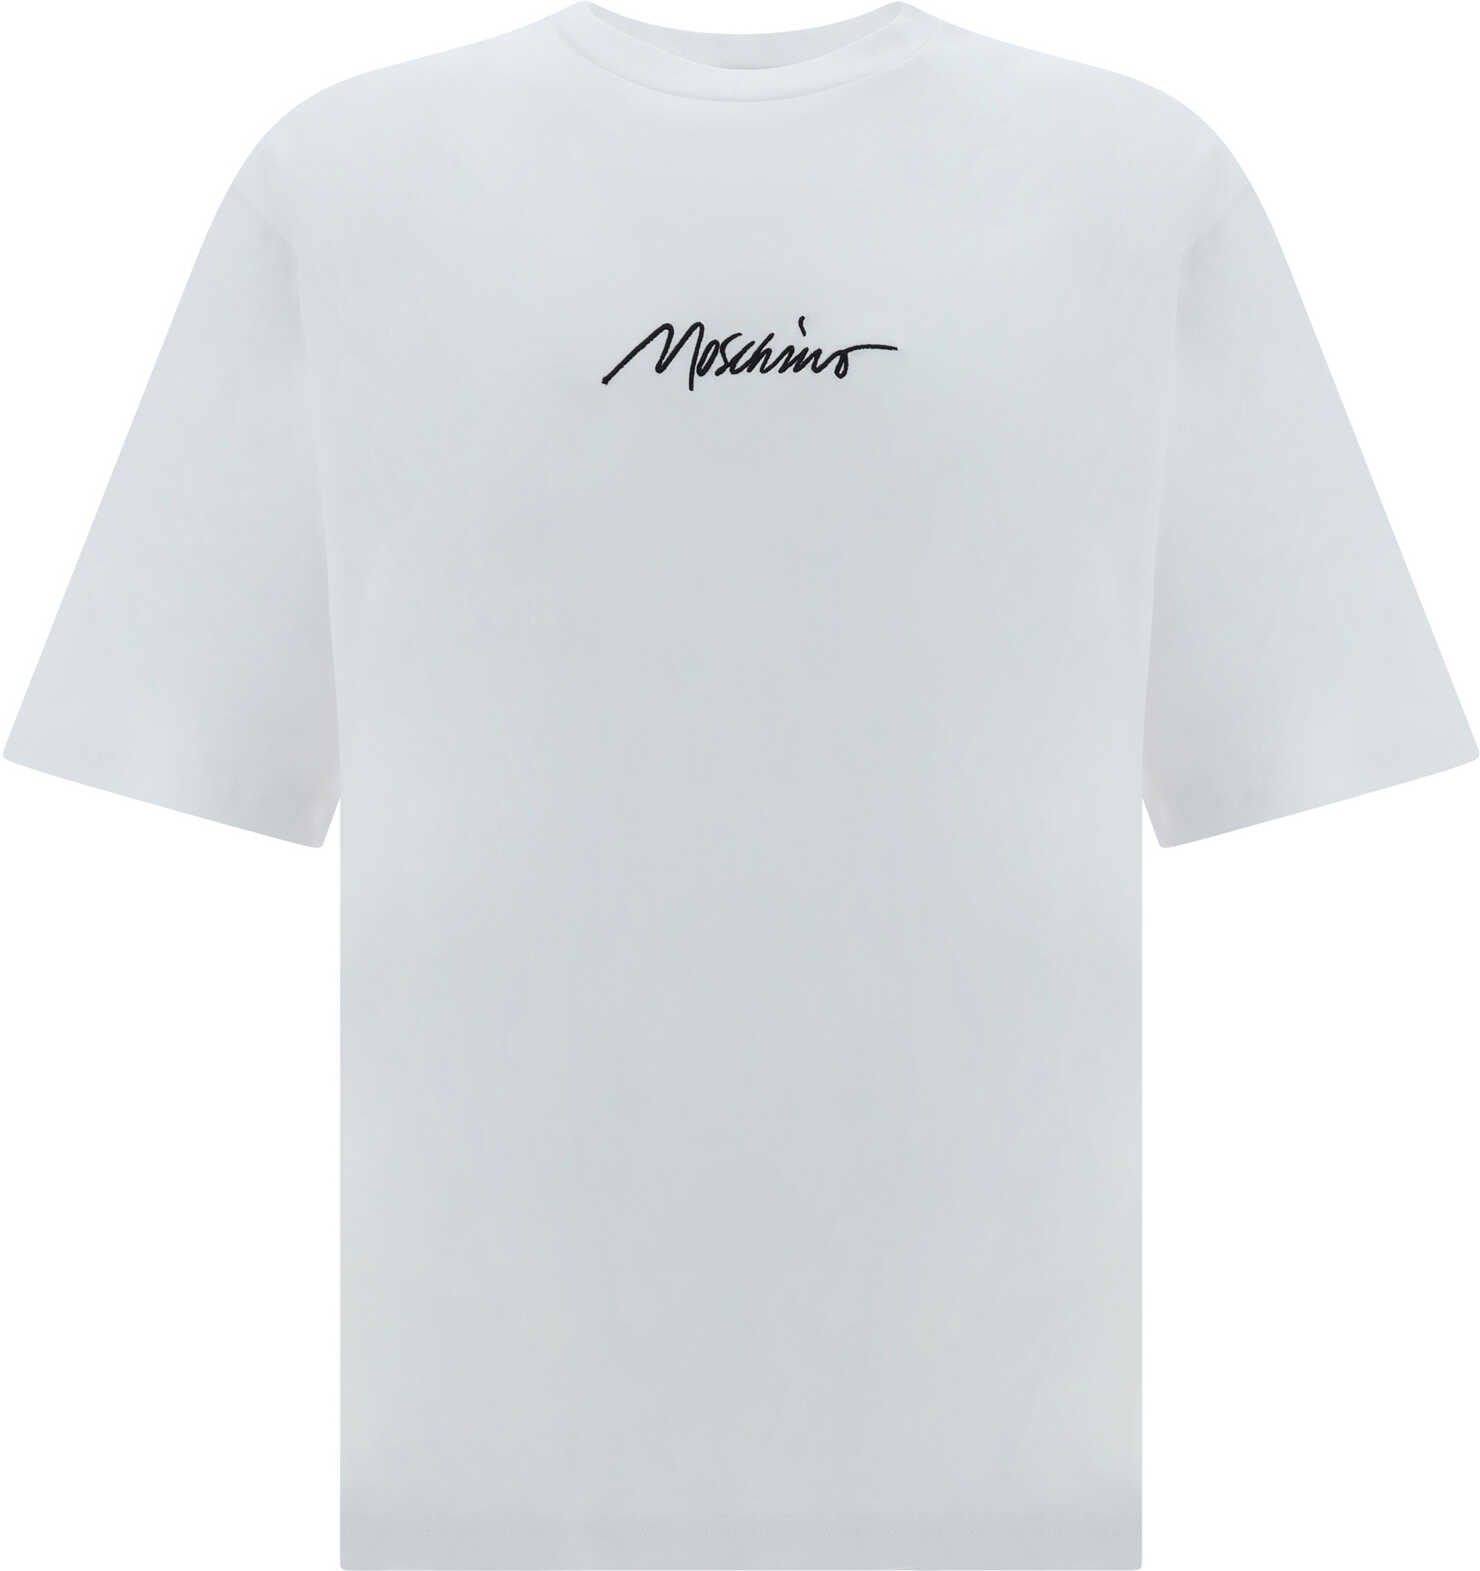 Moschino T-Shirt A1001